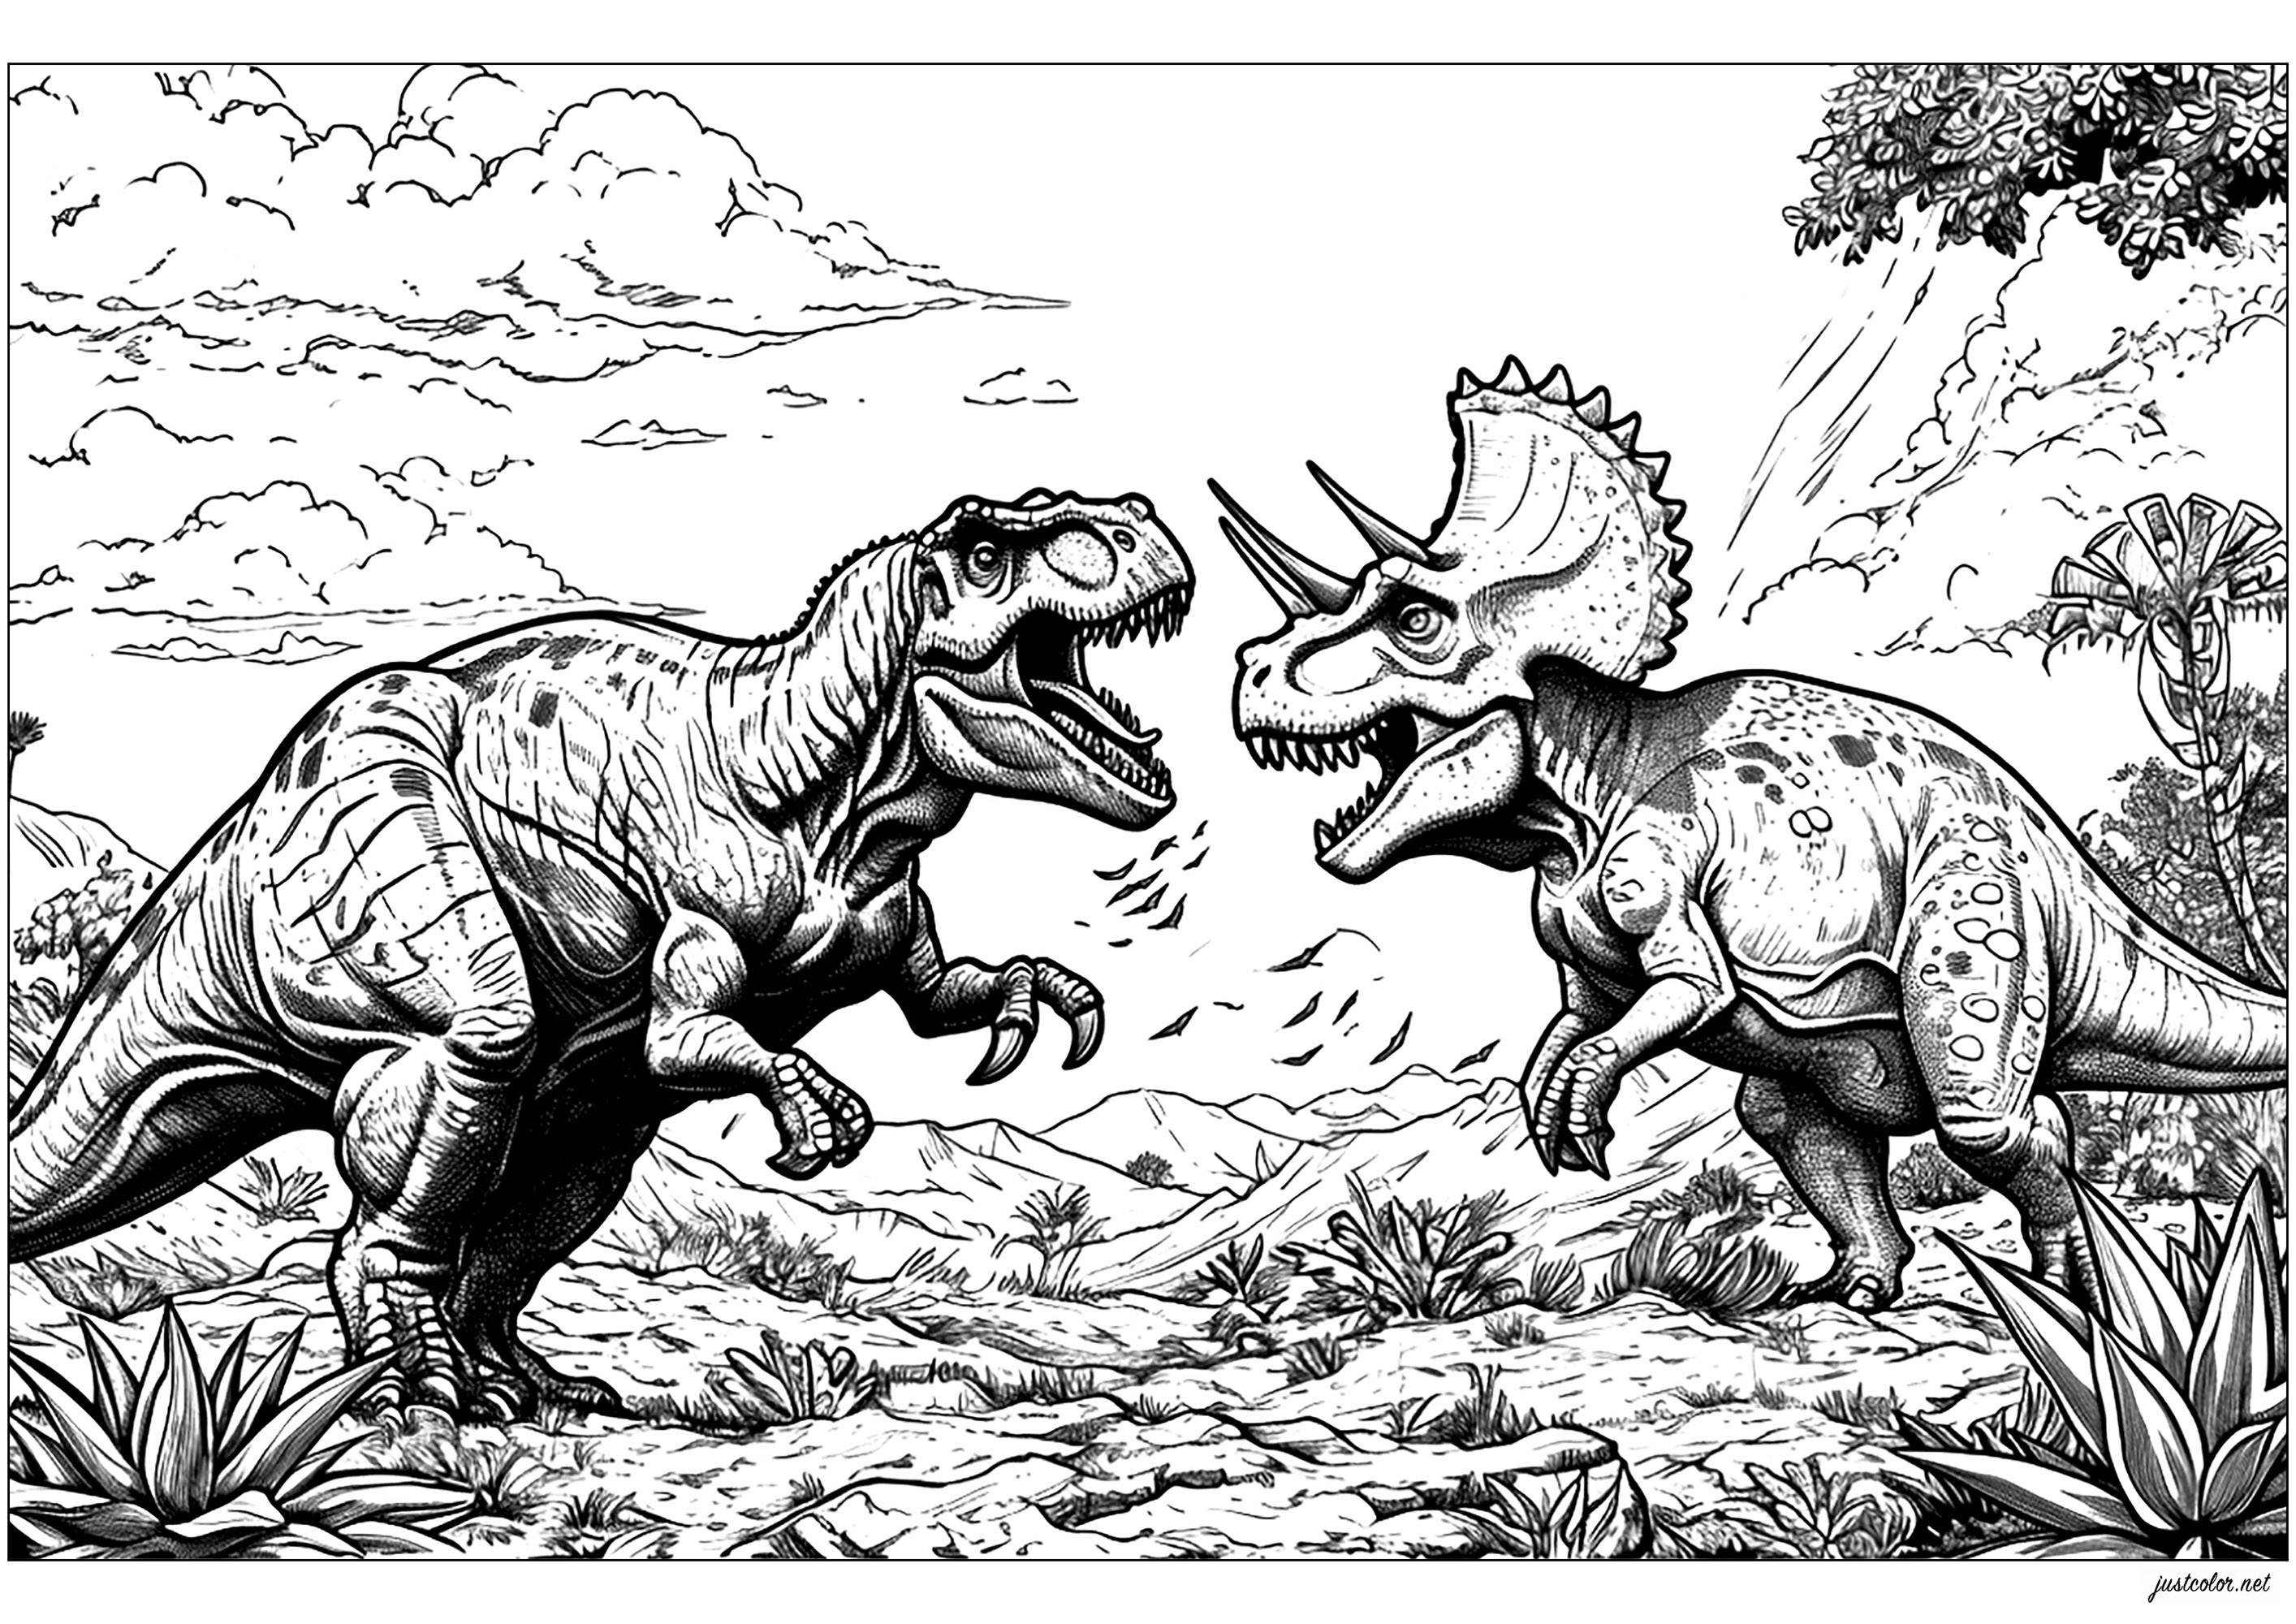 Battaglia tra due dinosauri: Tyrannosaurus e Triceraptos